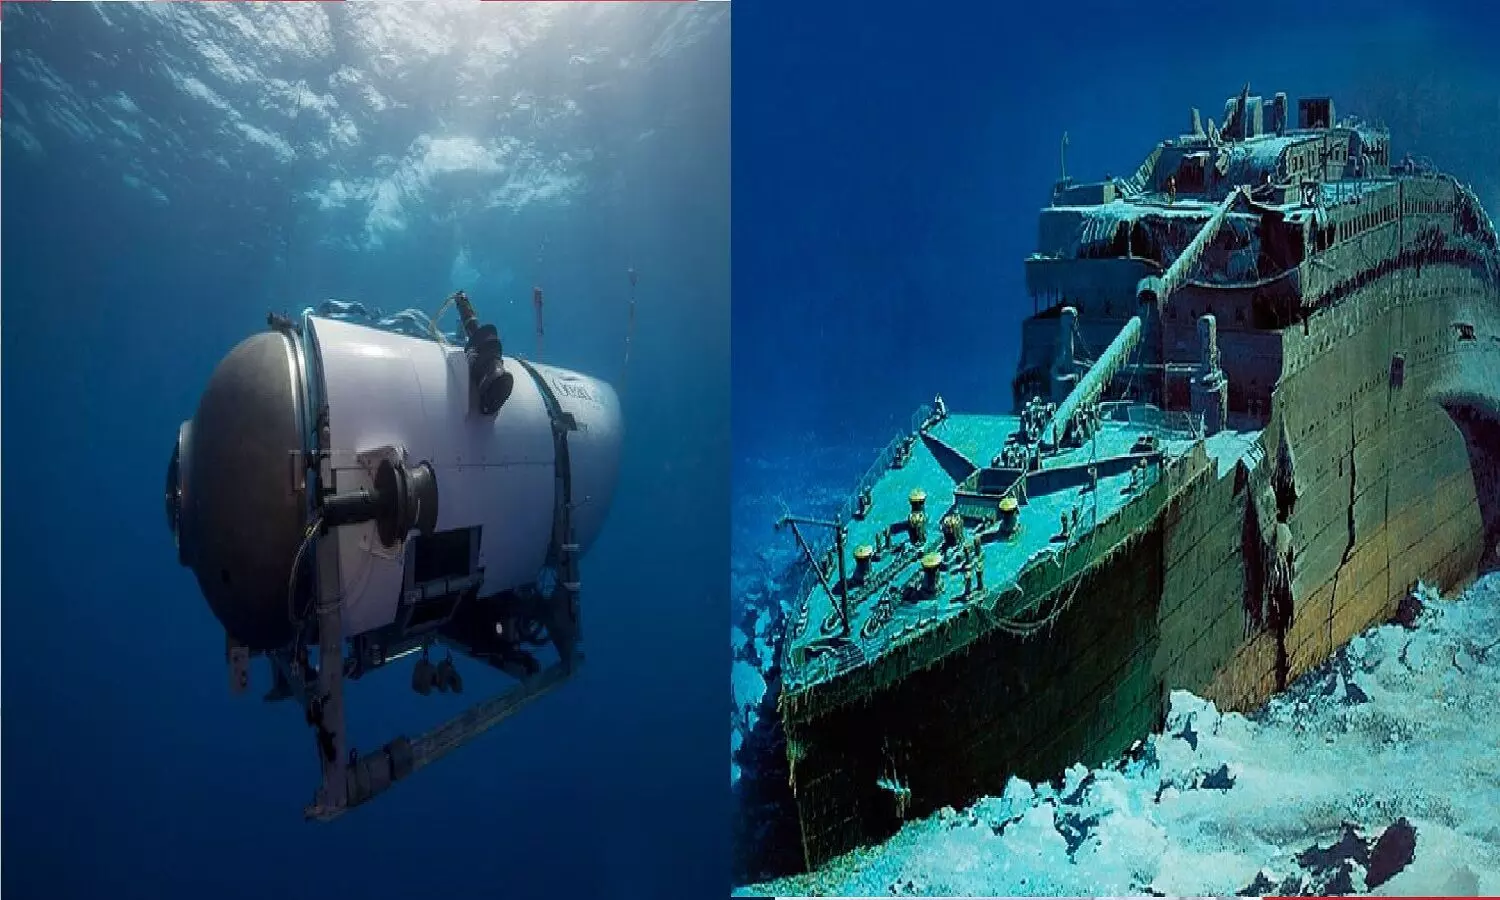 अटलांटिक महासागर में Tourist Submarine Titan दो दिन से लापता! ब्रिटिश अरबपति सहित 5 लोग सवार थे, टाइनेटिक का मलवा देखने गए थे